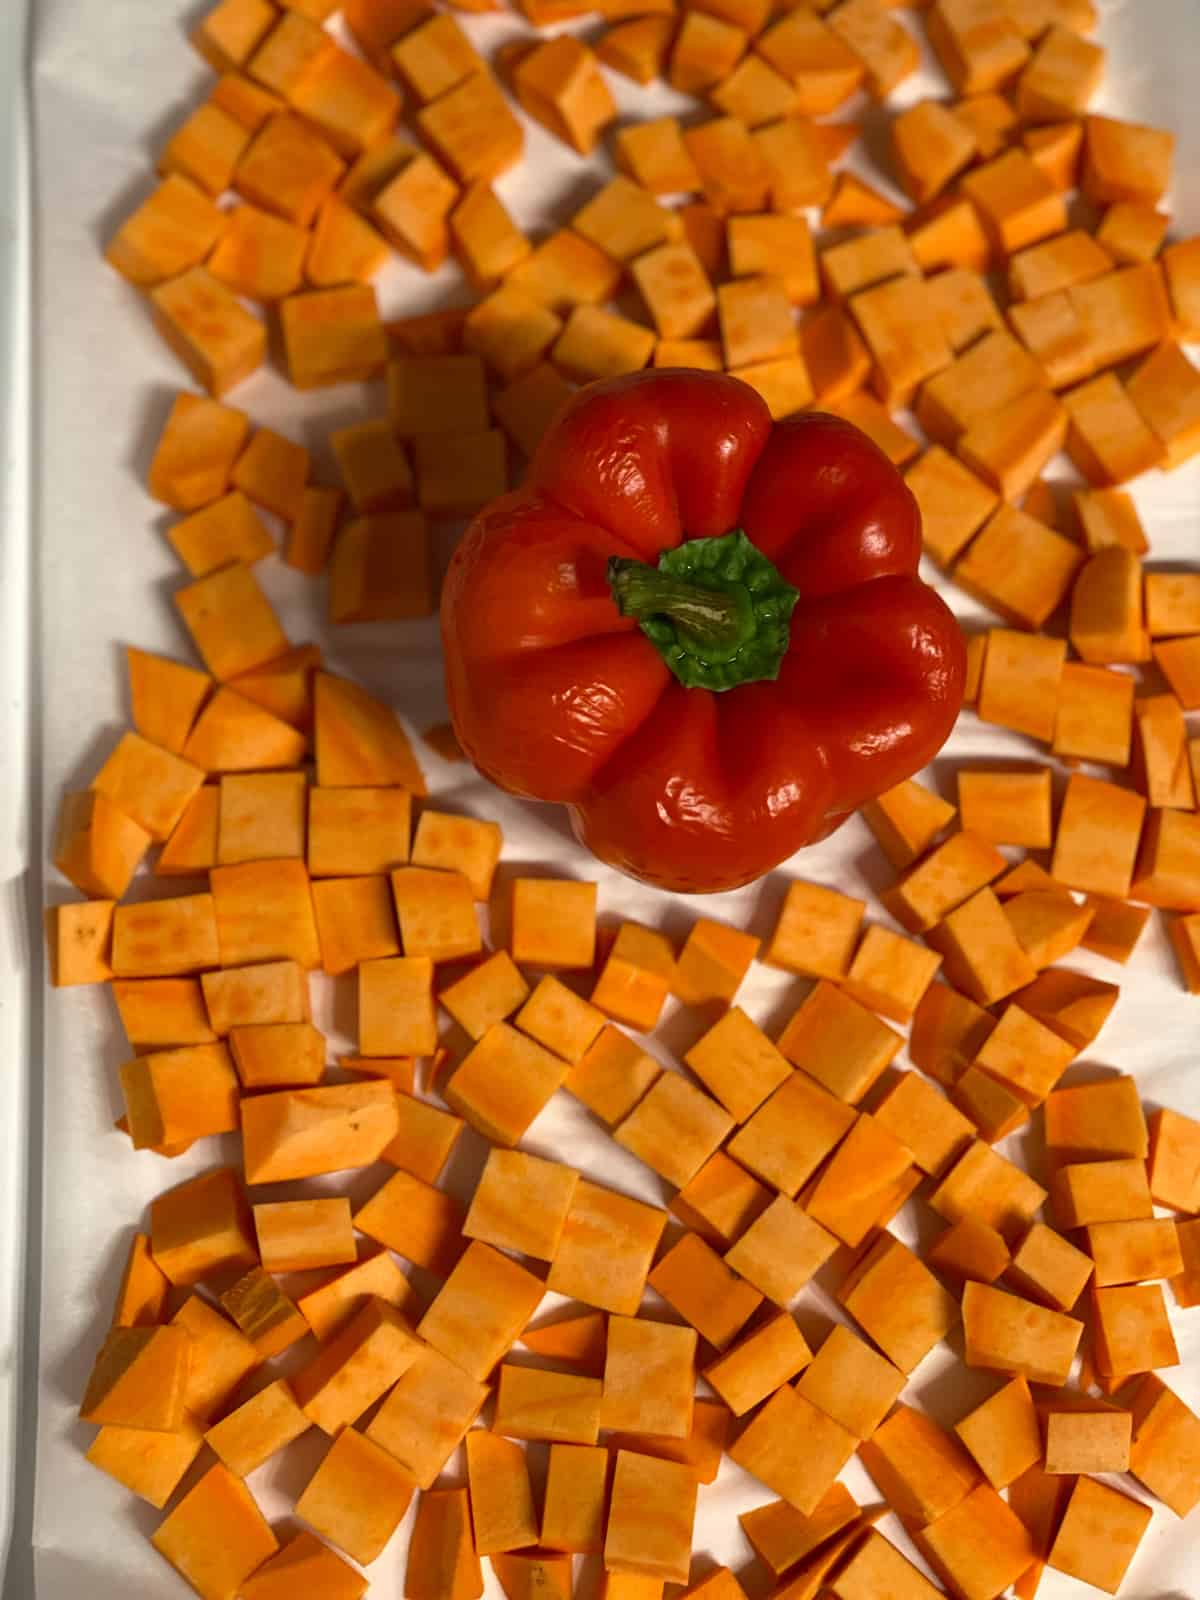 cubed sweet potato alongside a red pepper on a baking tray